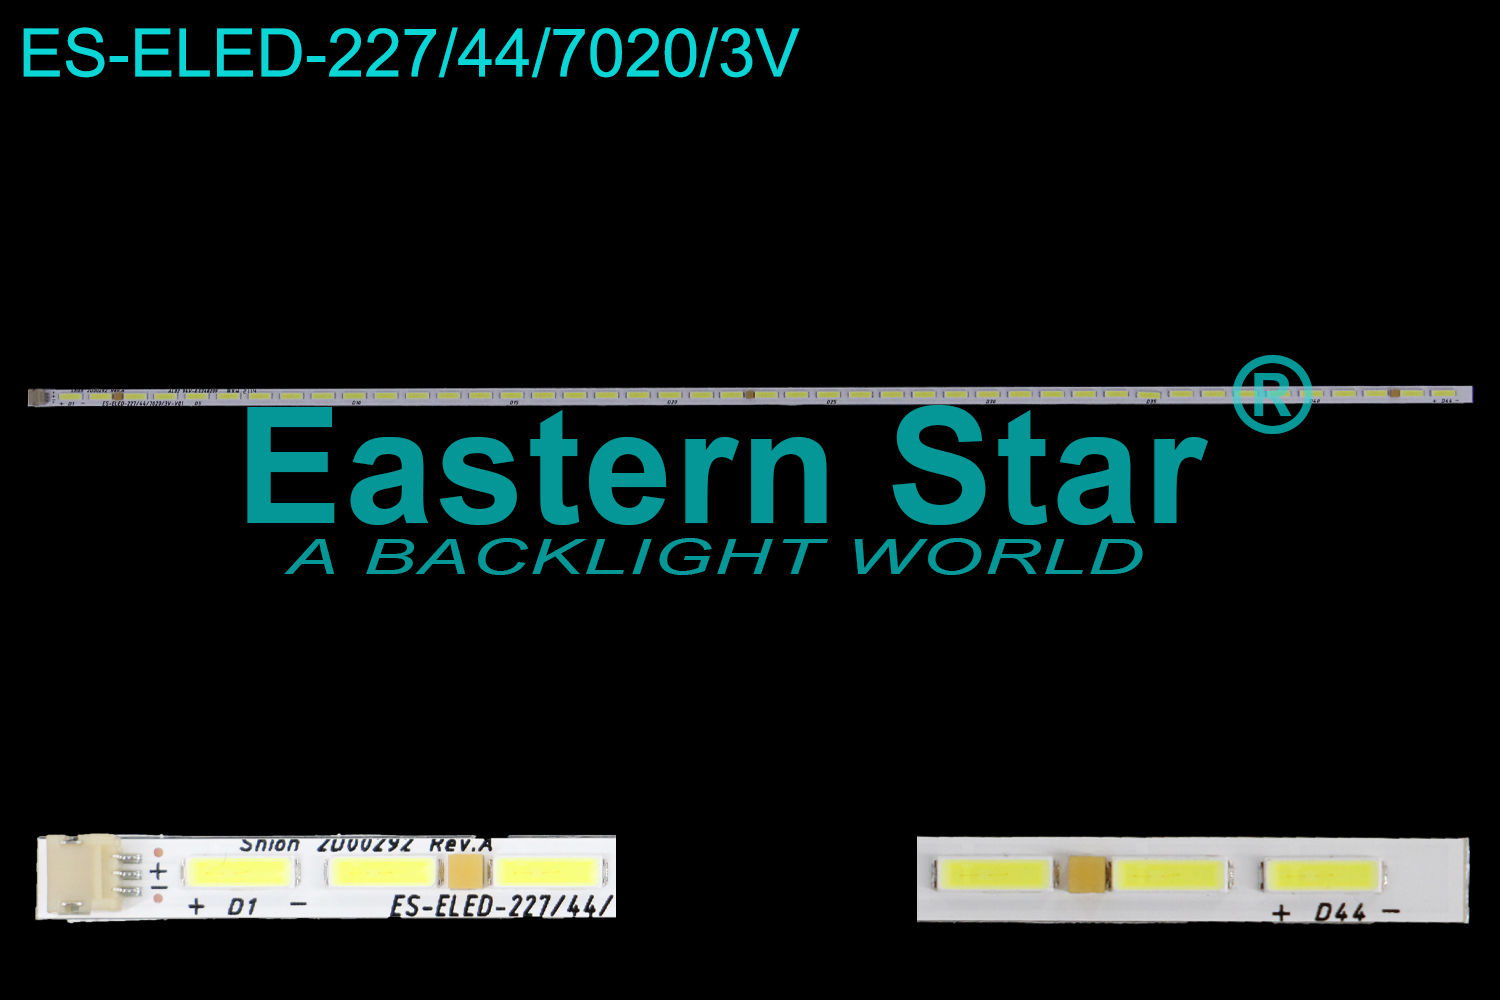 ES-ELED-227 ELED/EDGE TV backlight use for Arcelik 32''  SHIEON 2D00292 REV.A 94V-0E248209 APC (1)